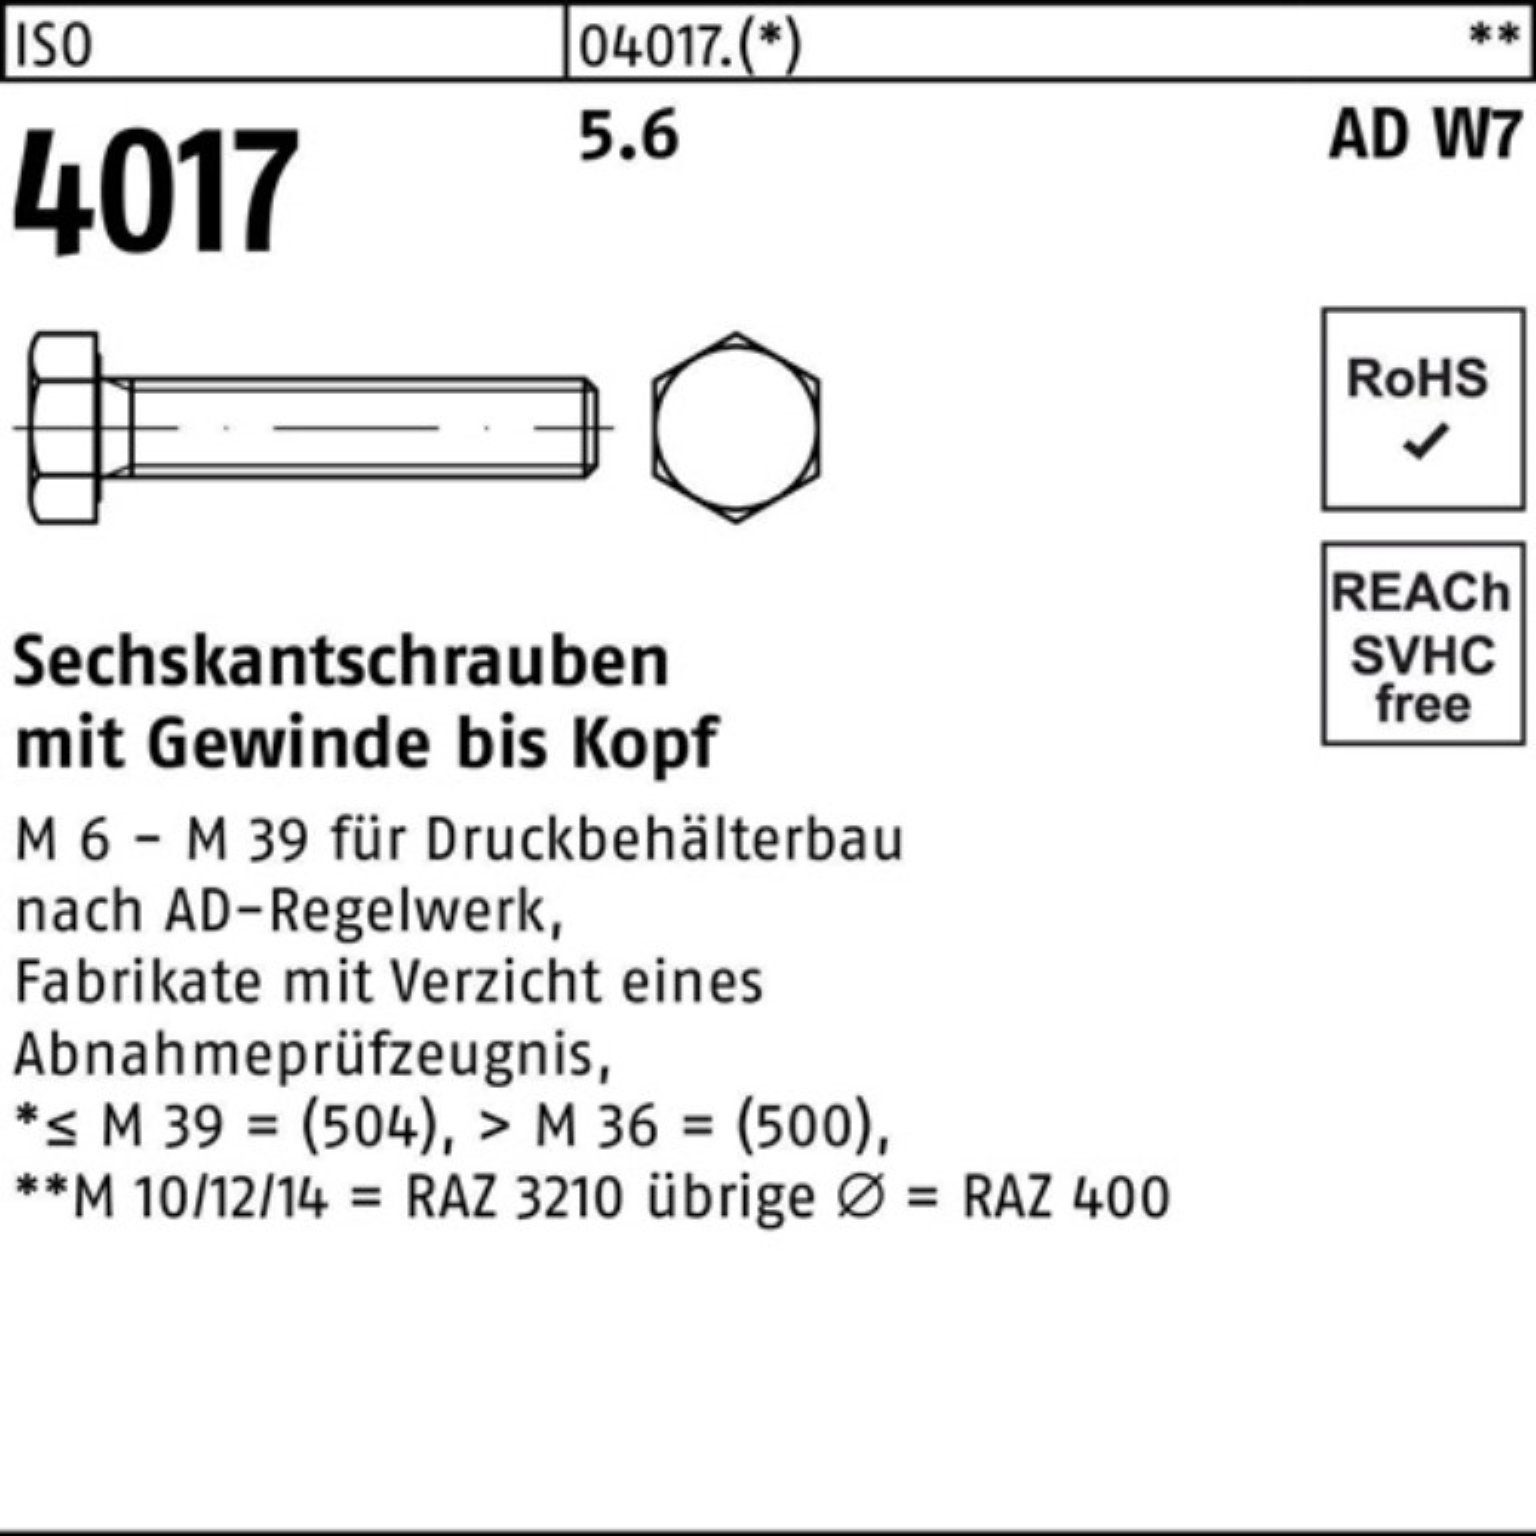 VG Pack Bufab 100er 25 ISO 5.6 80 W7 Sechskantschraube 4017 M20x Sechskantschraube I Stück AD